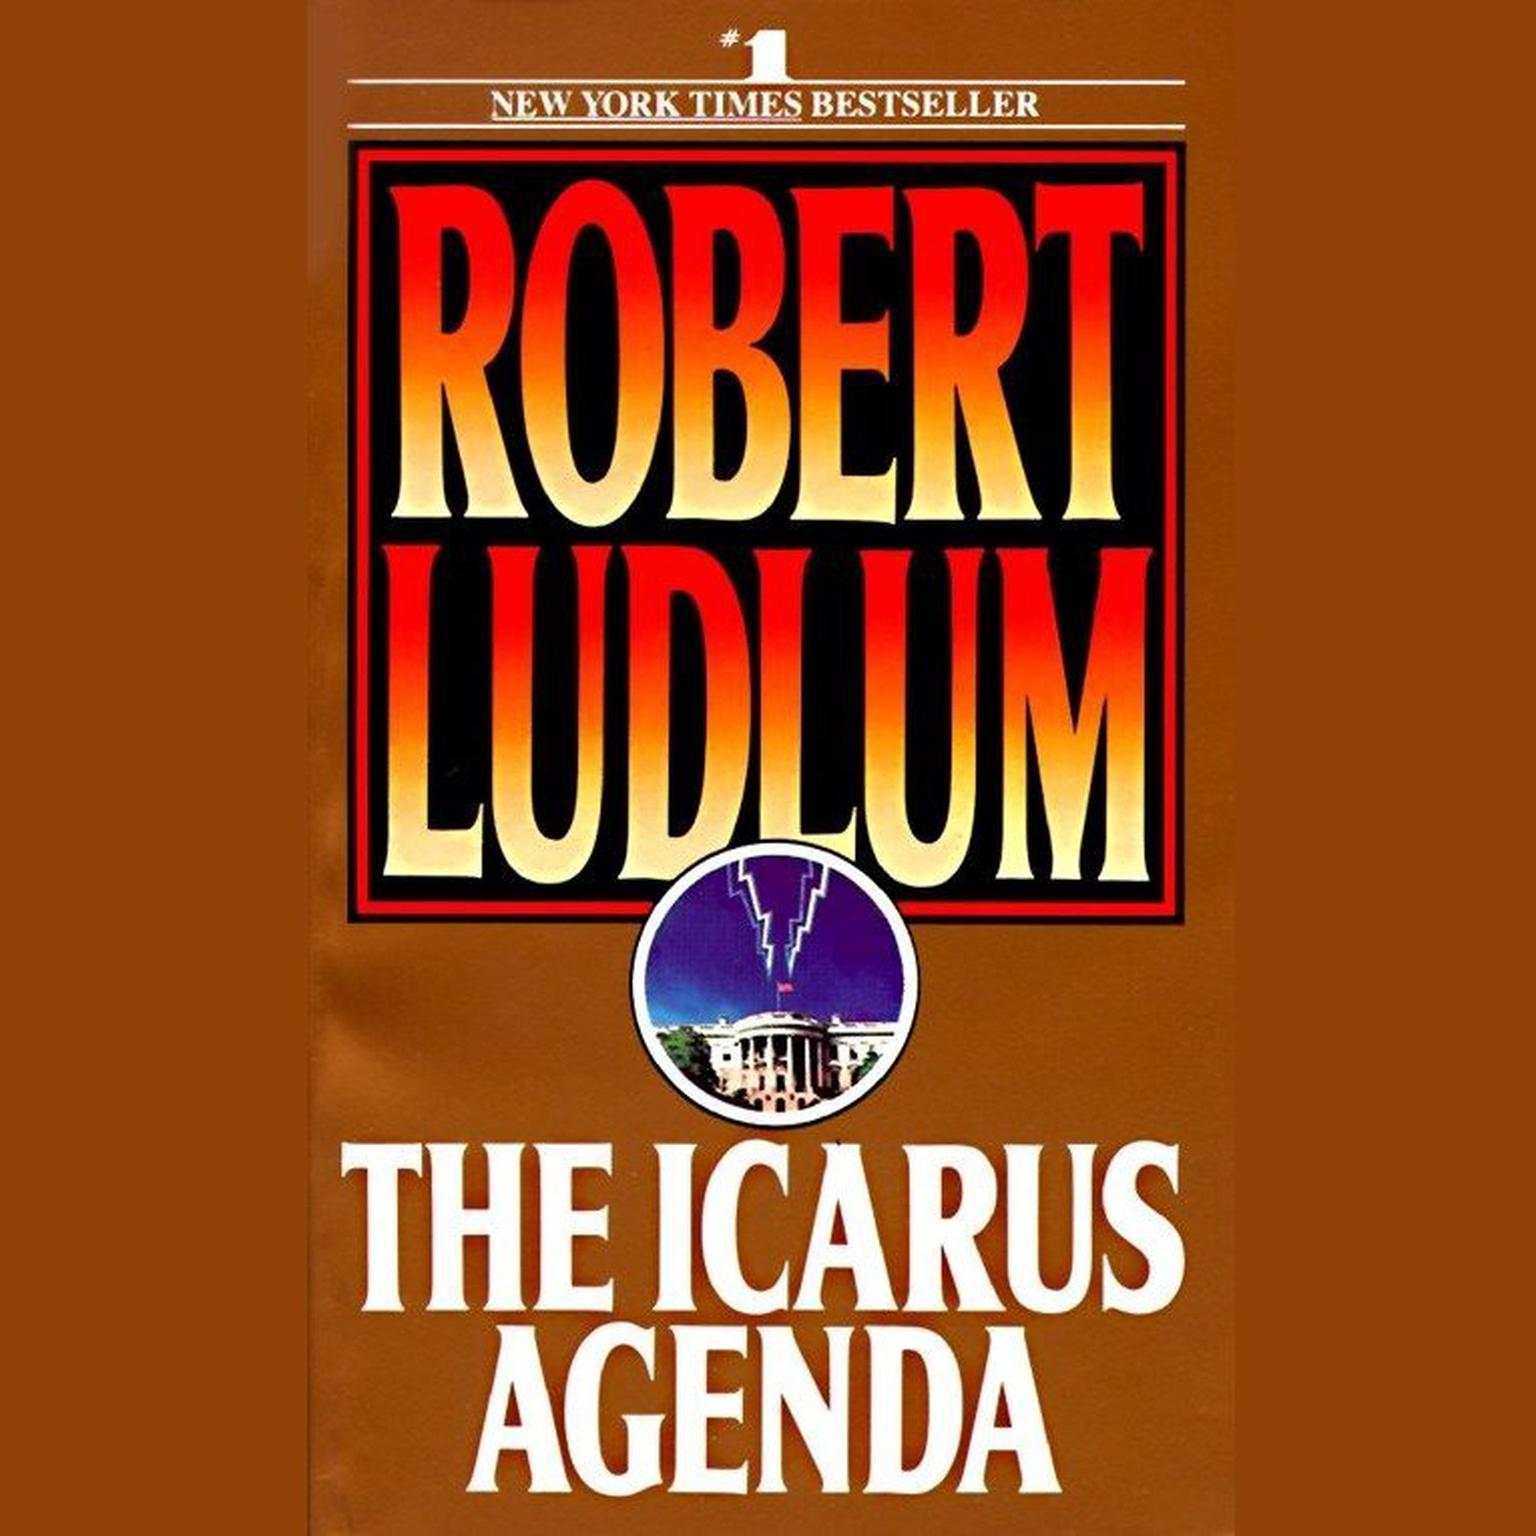 The Icarus Agenda Audiobook, by Robert Ludlum